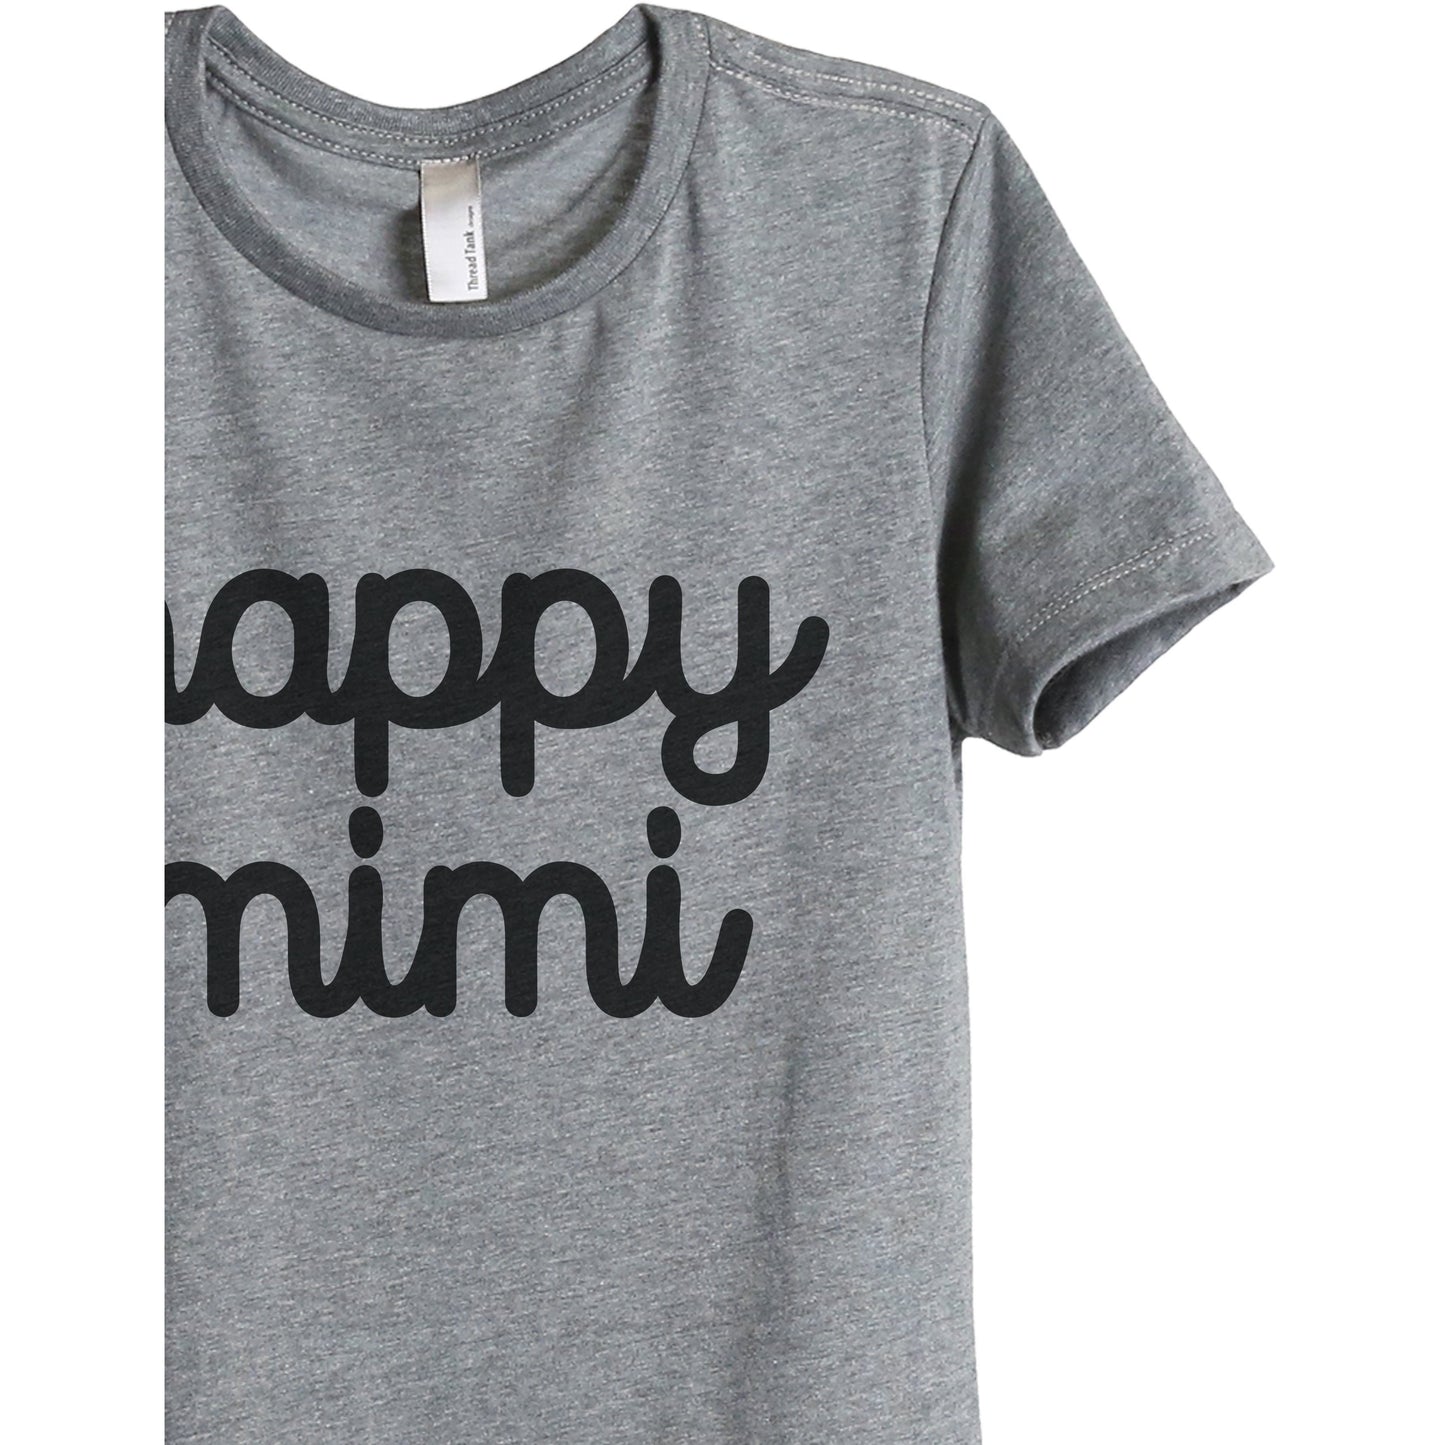 Happy Mimi Women's Relaxed Crewneck T-Shirt Top Tee Heather Grey Zoom Details
